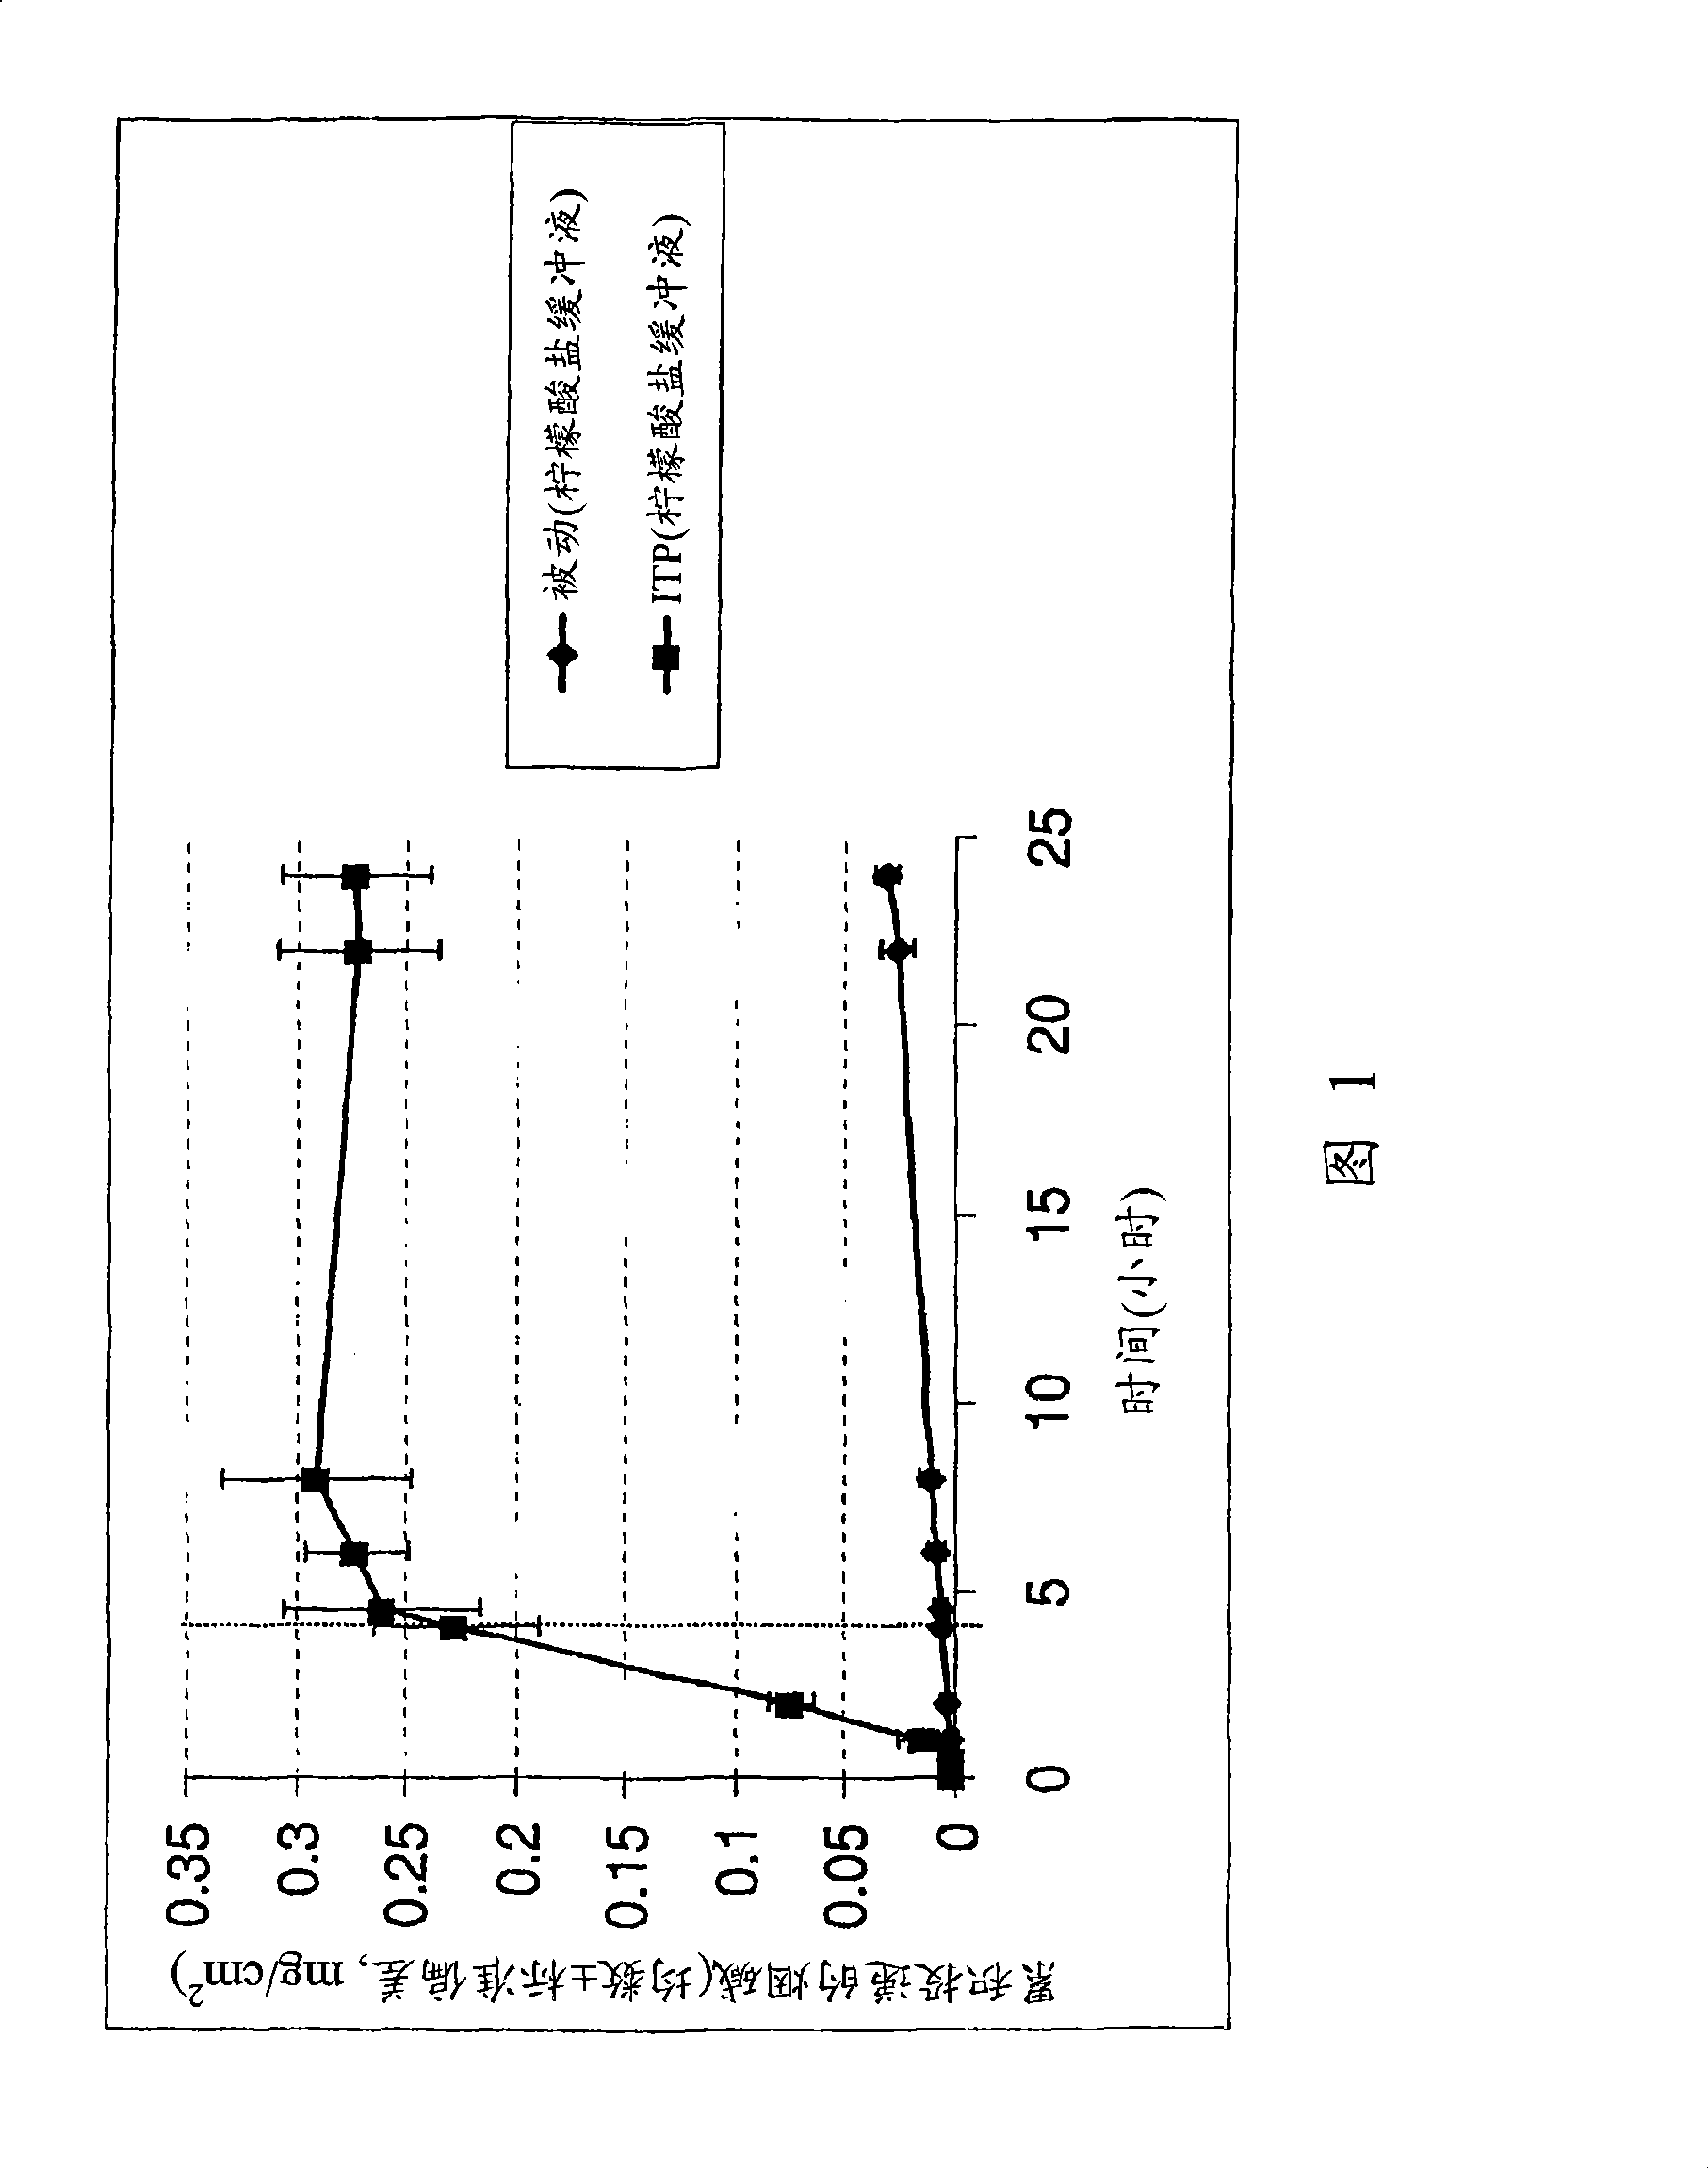 Iontophoretic transdermal delivery of nicotine salts